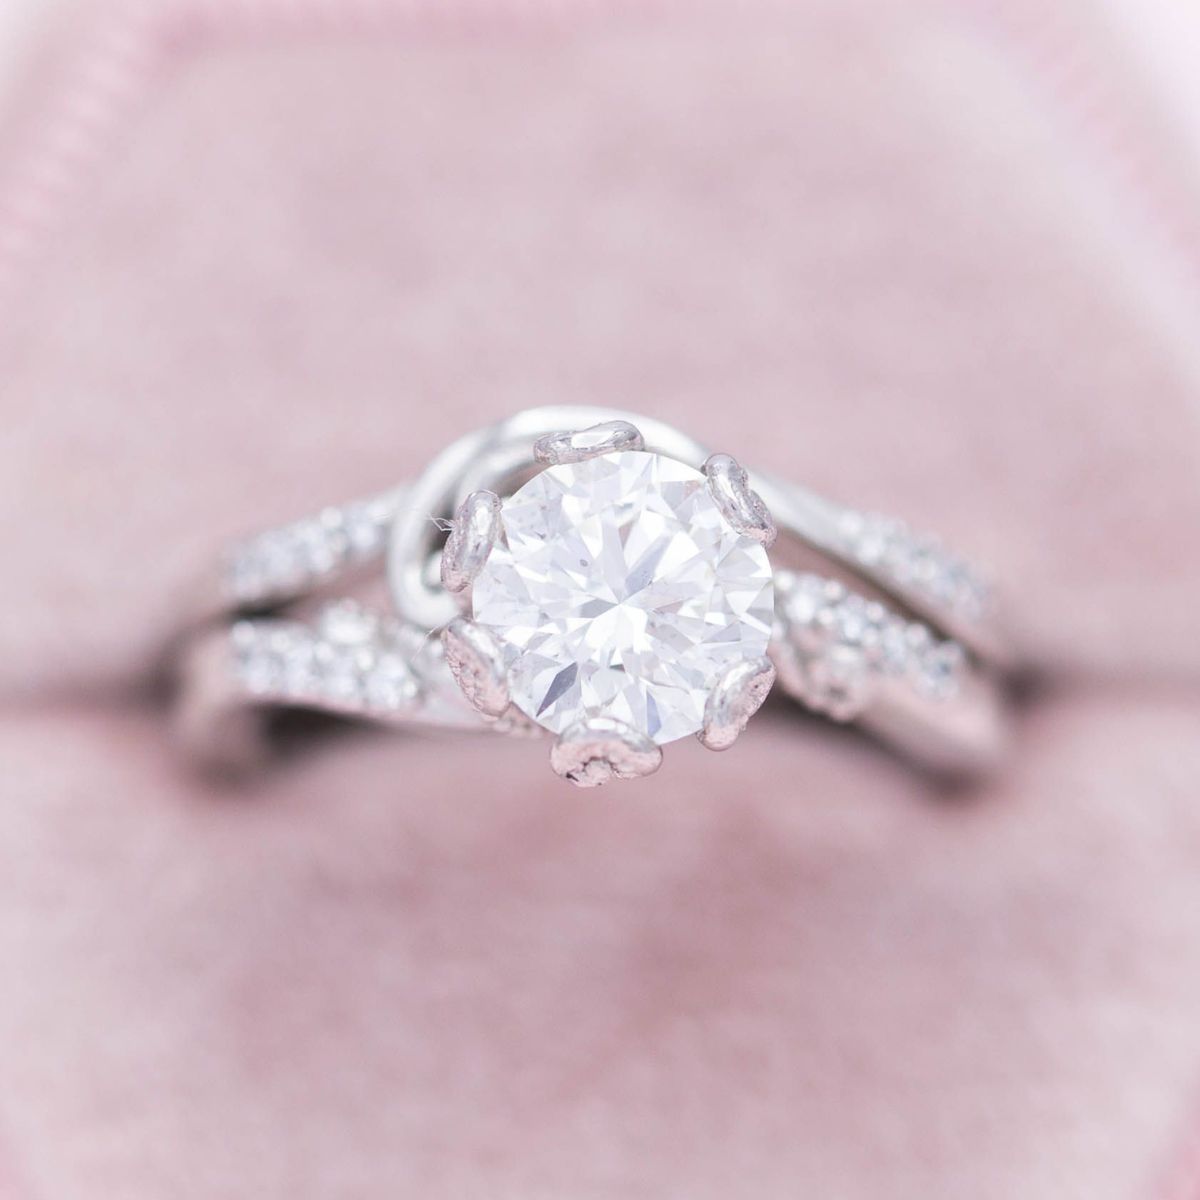 Ocean engagement ring designs| CustomMade.com